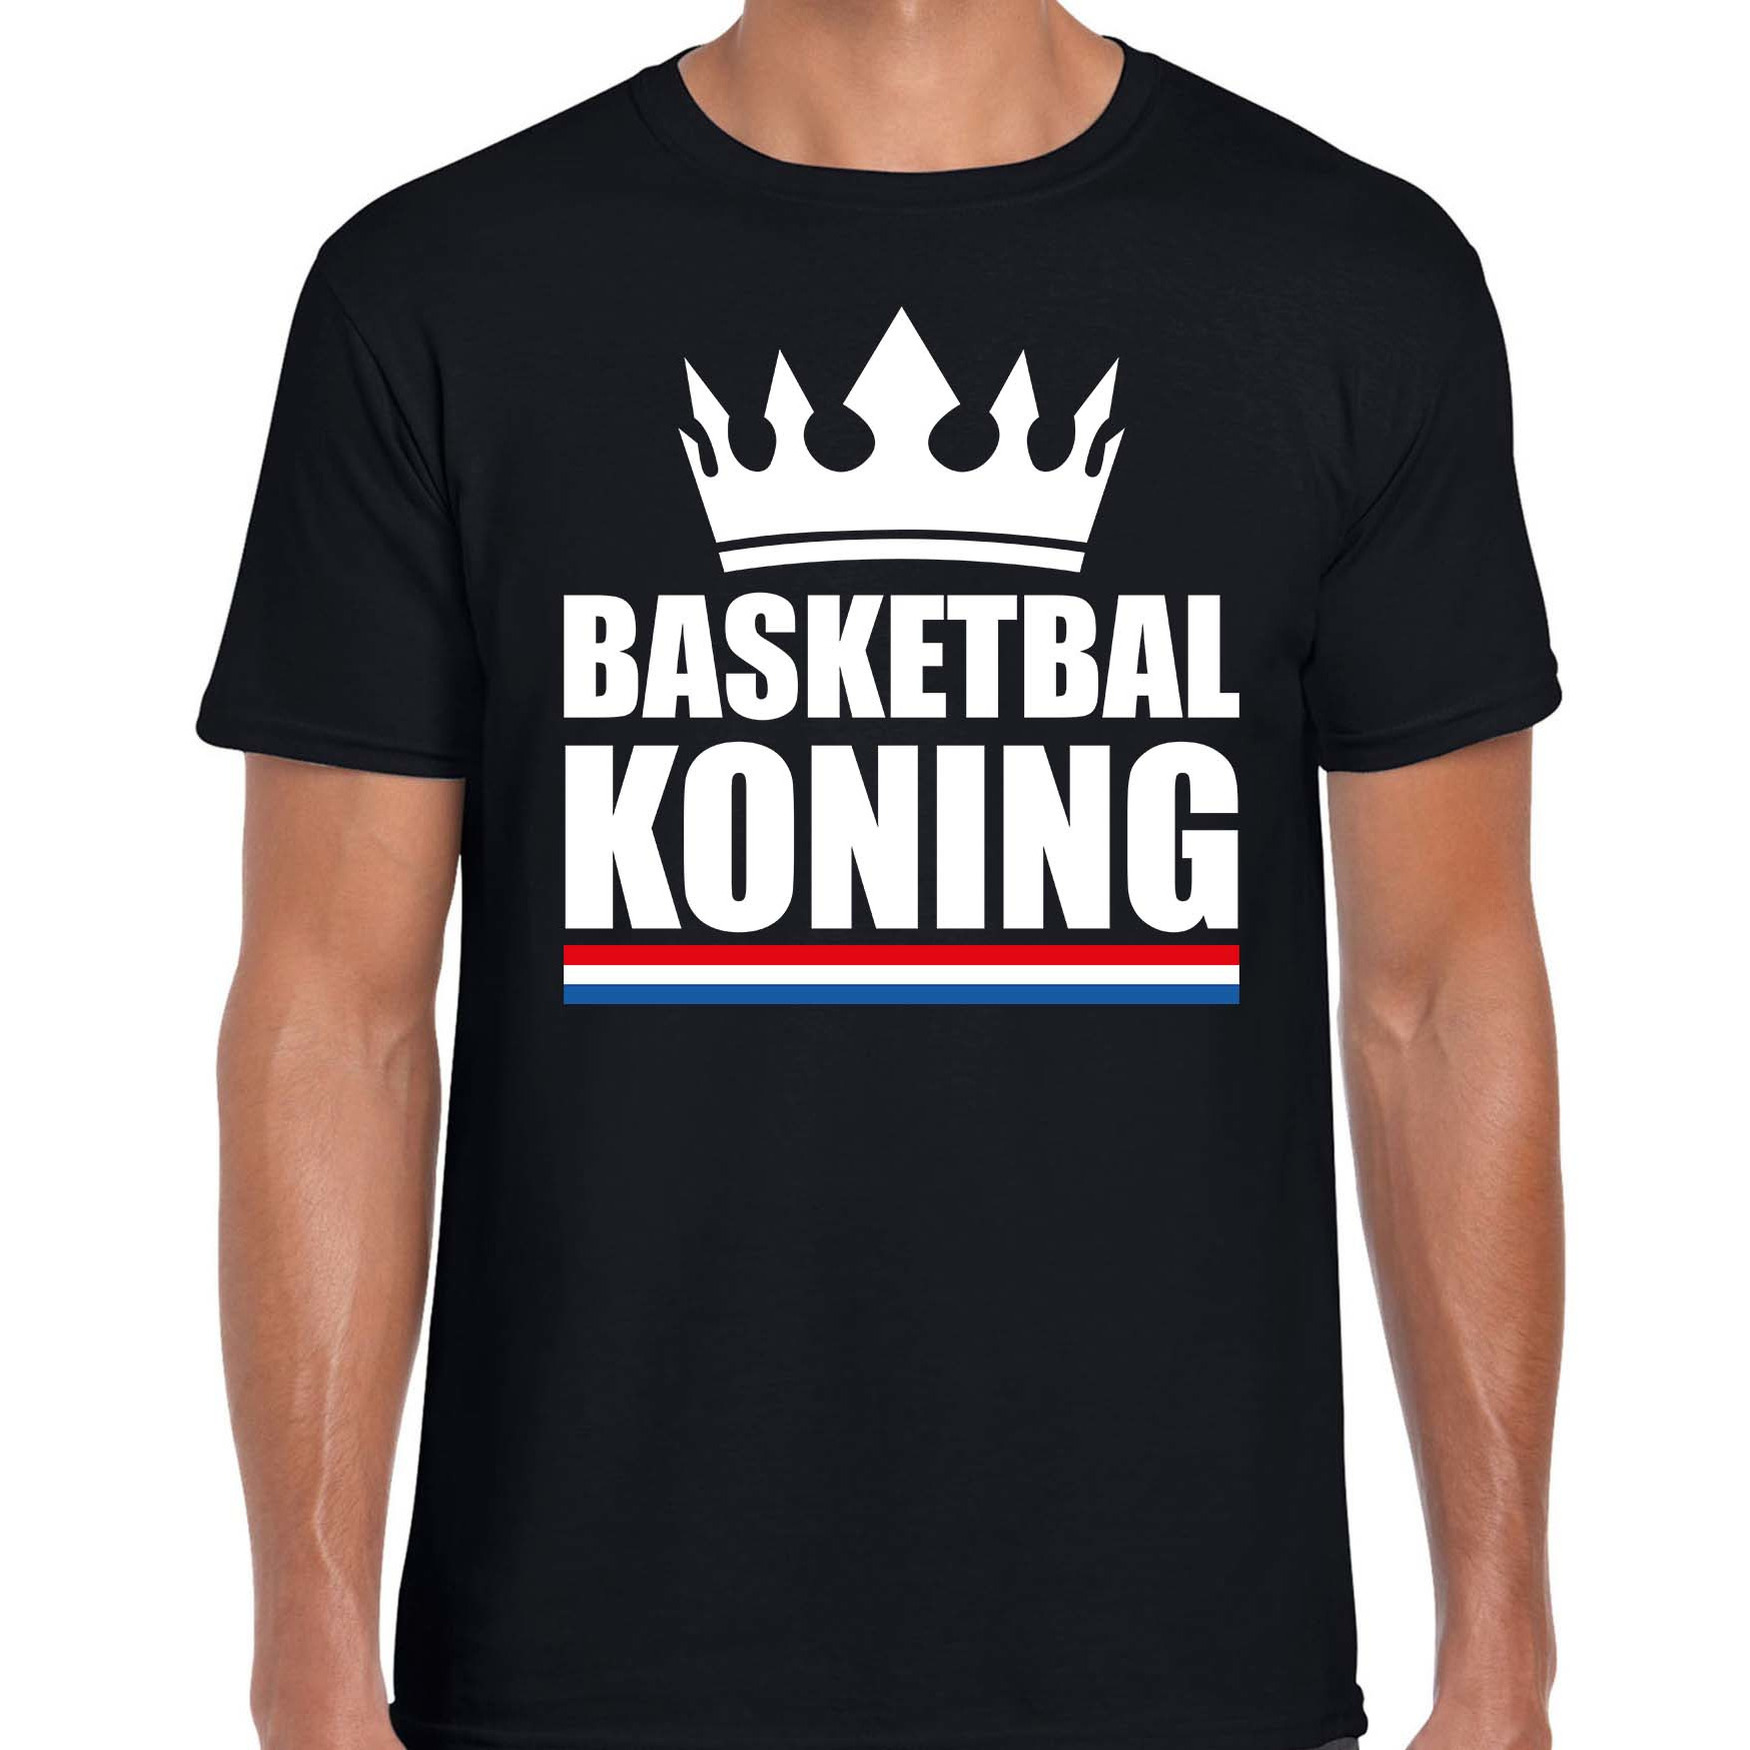 Basketbal koning t-shirt zwart heren Sport-hobby shirts